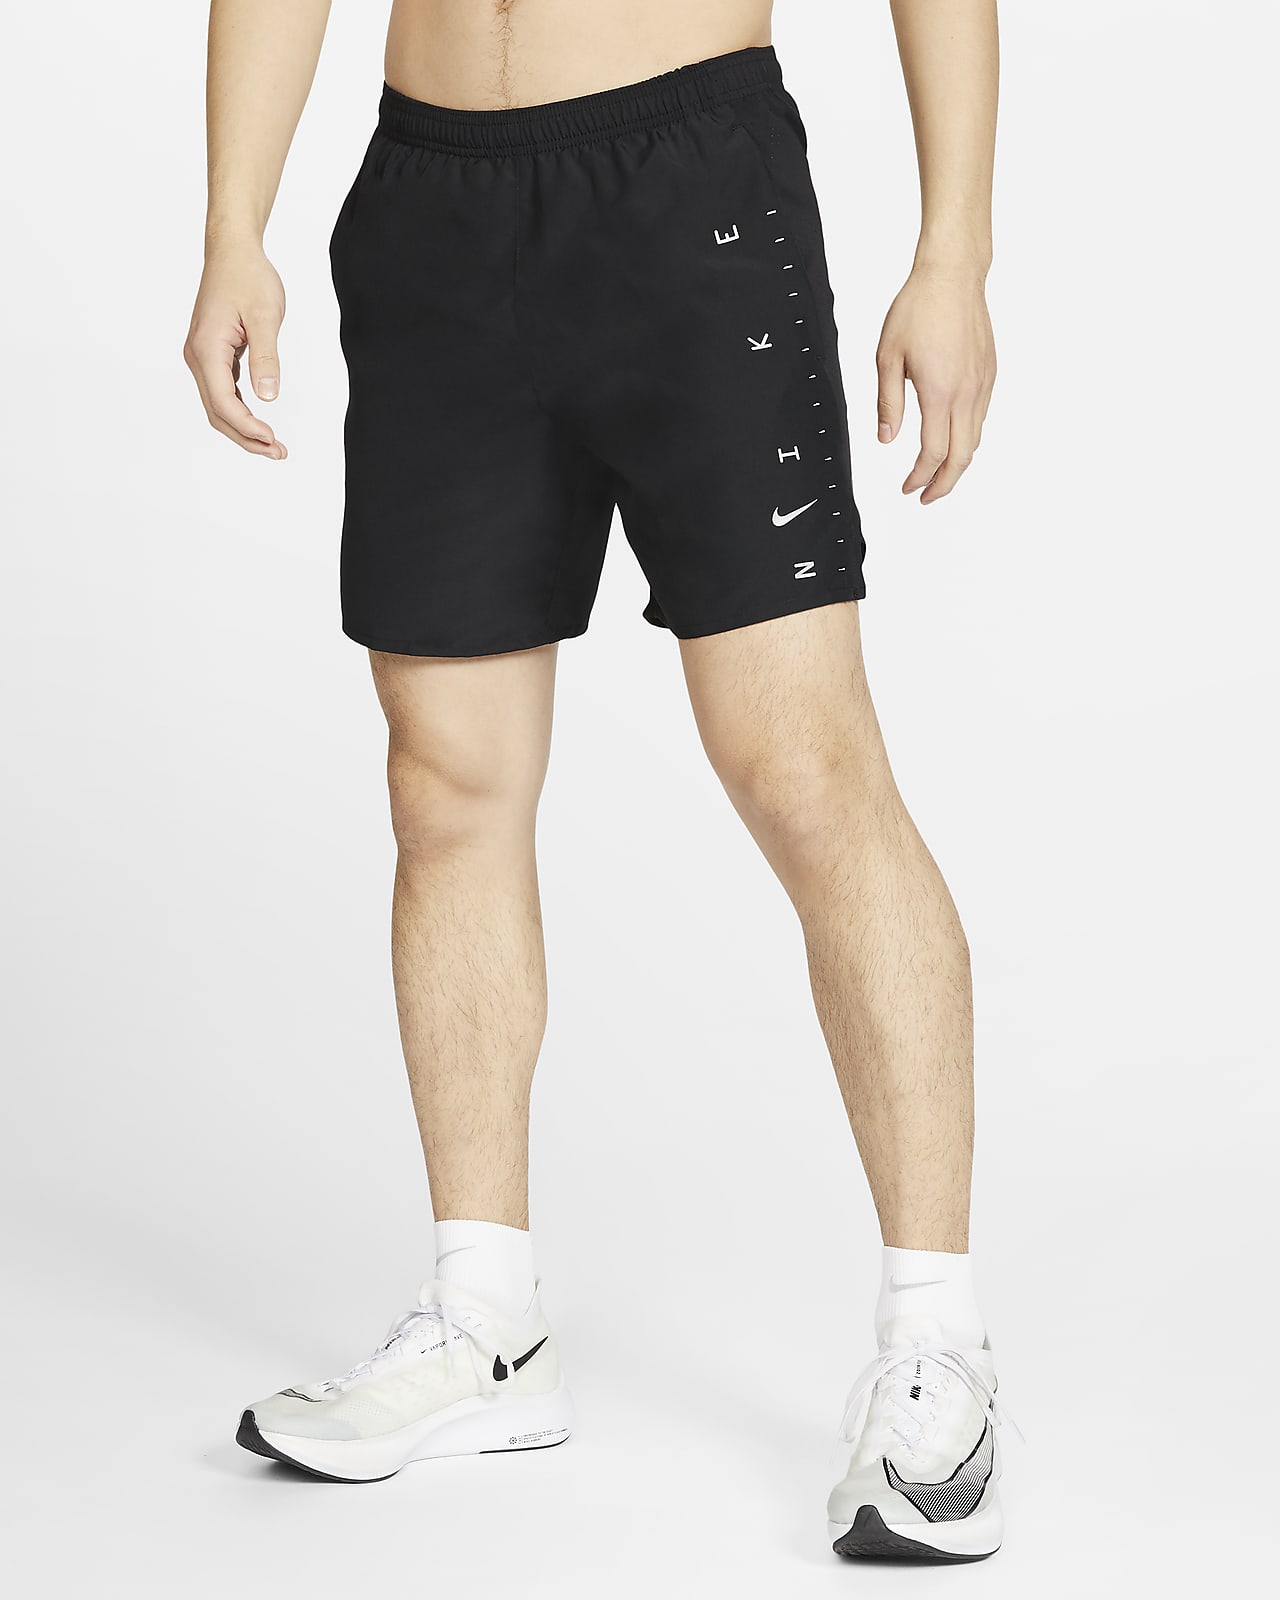 black nike challenger shorts